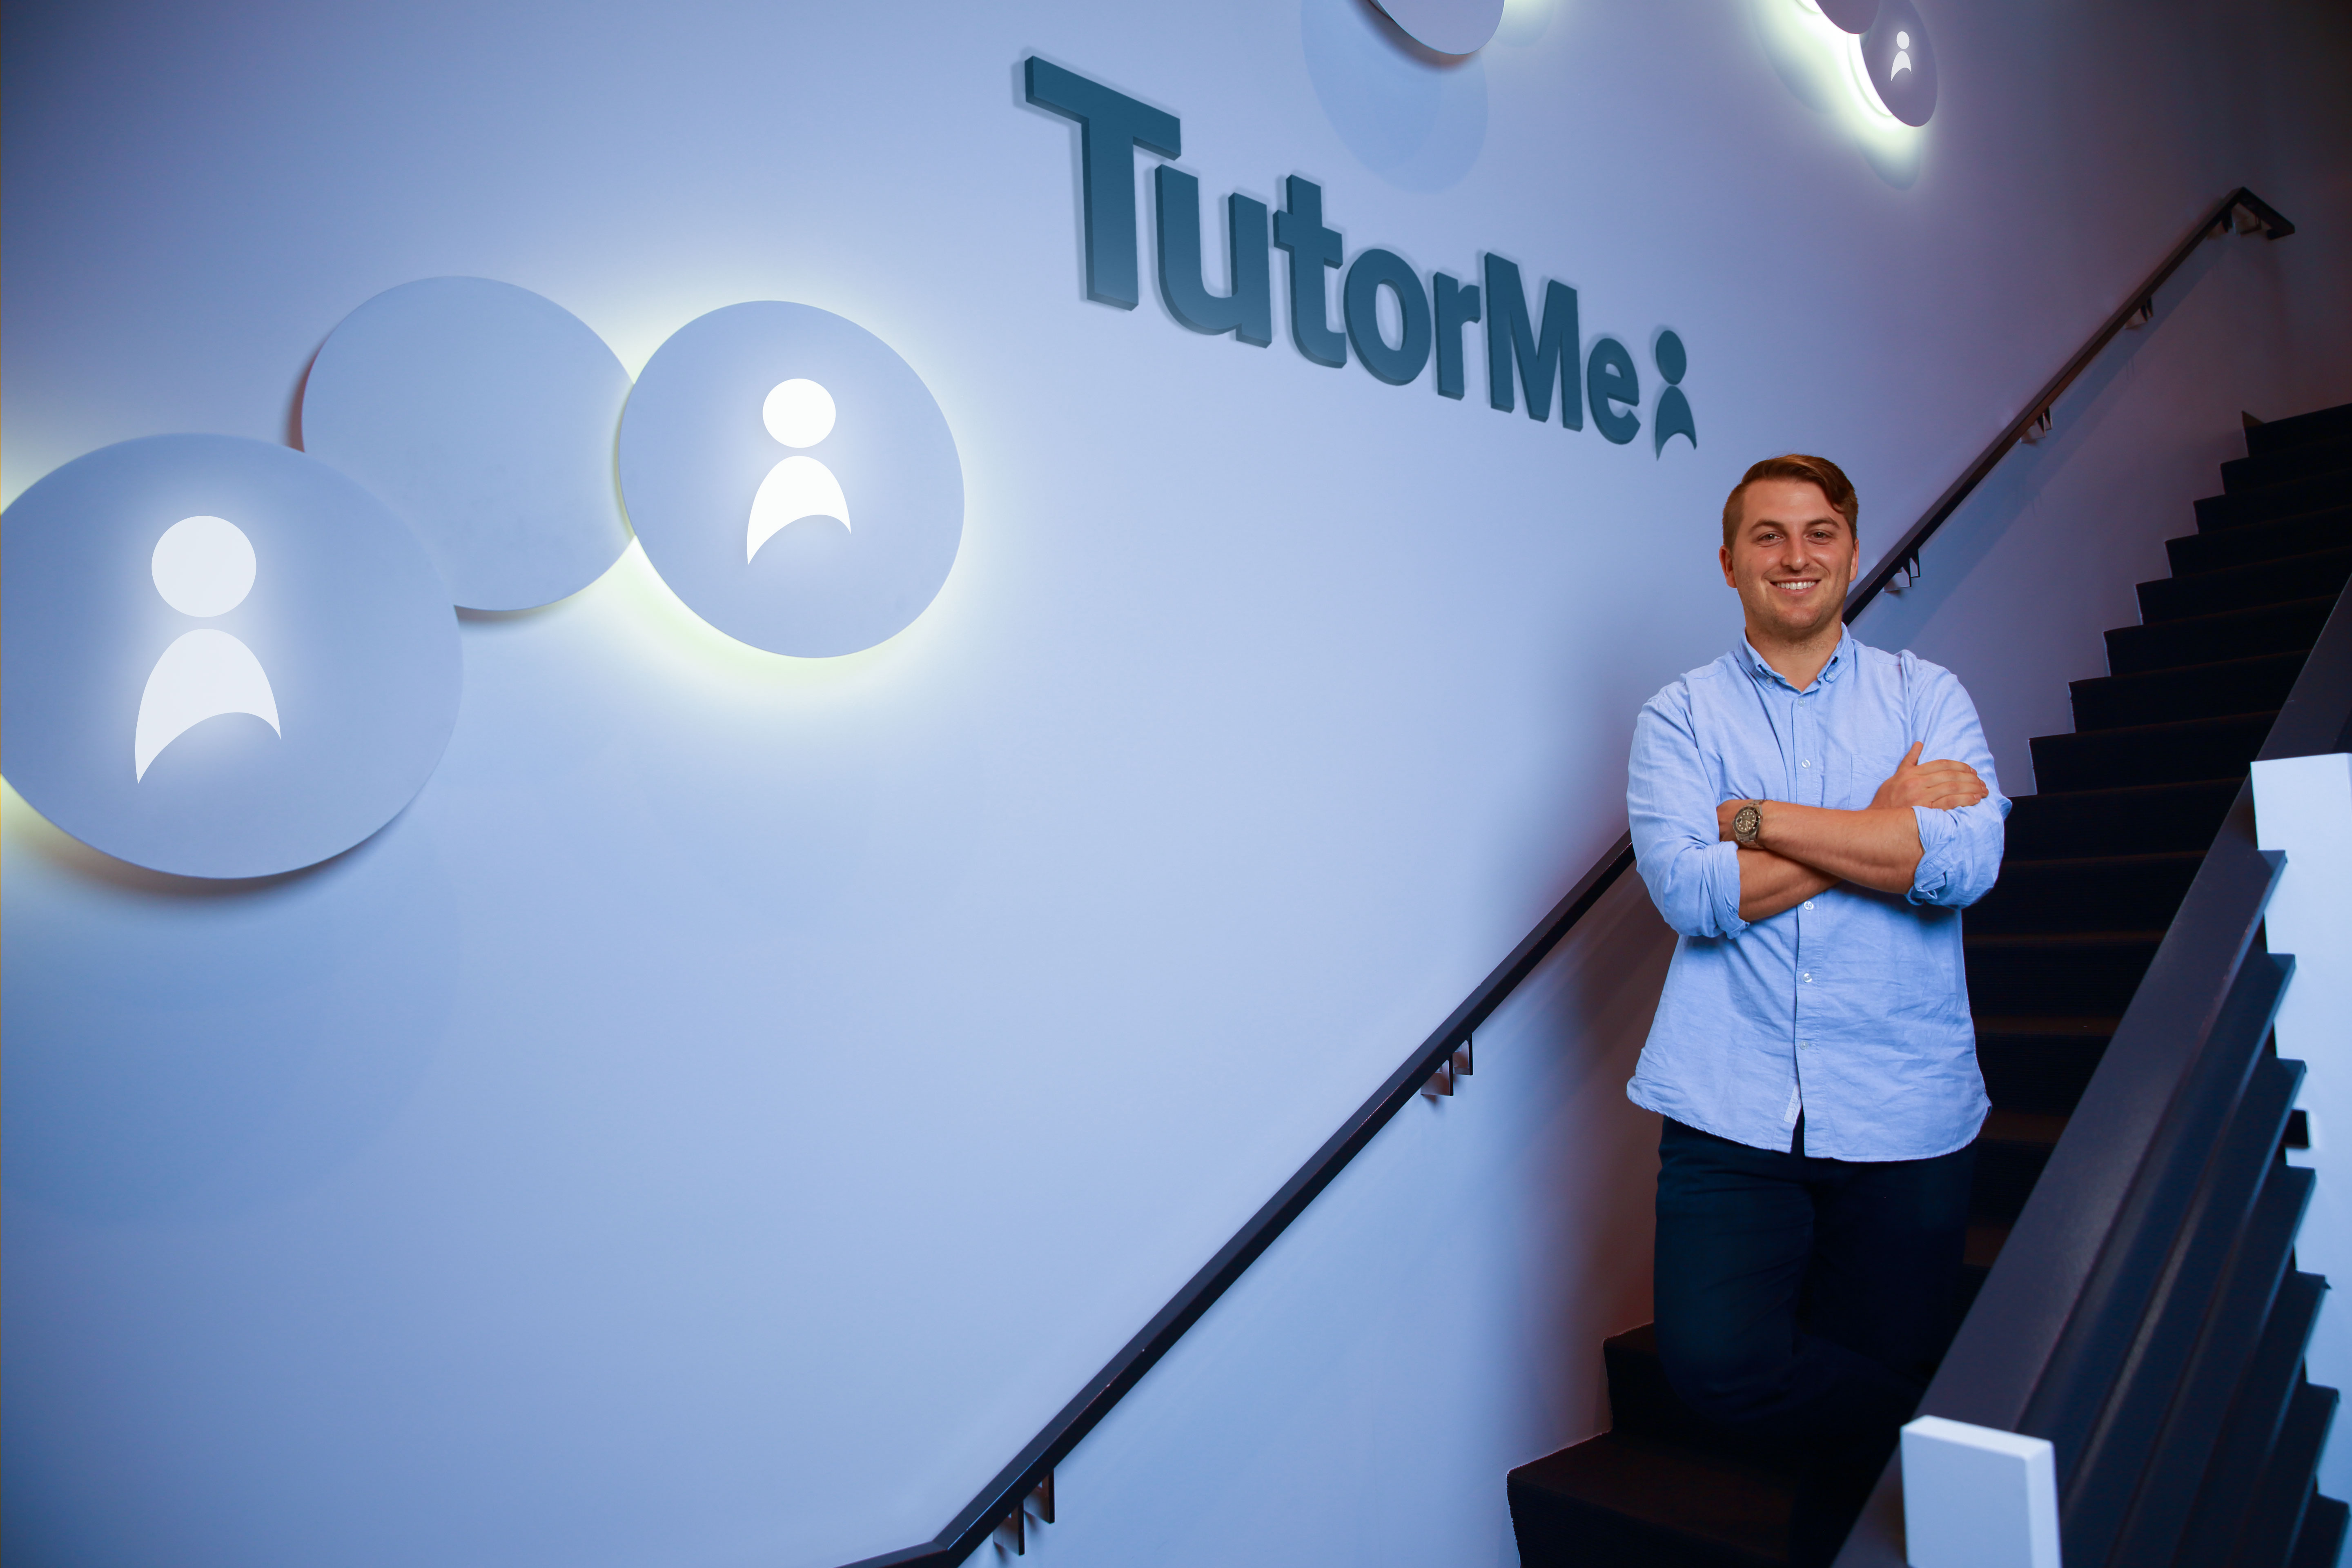 TutorMe CEO Myles Hunter